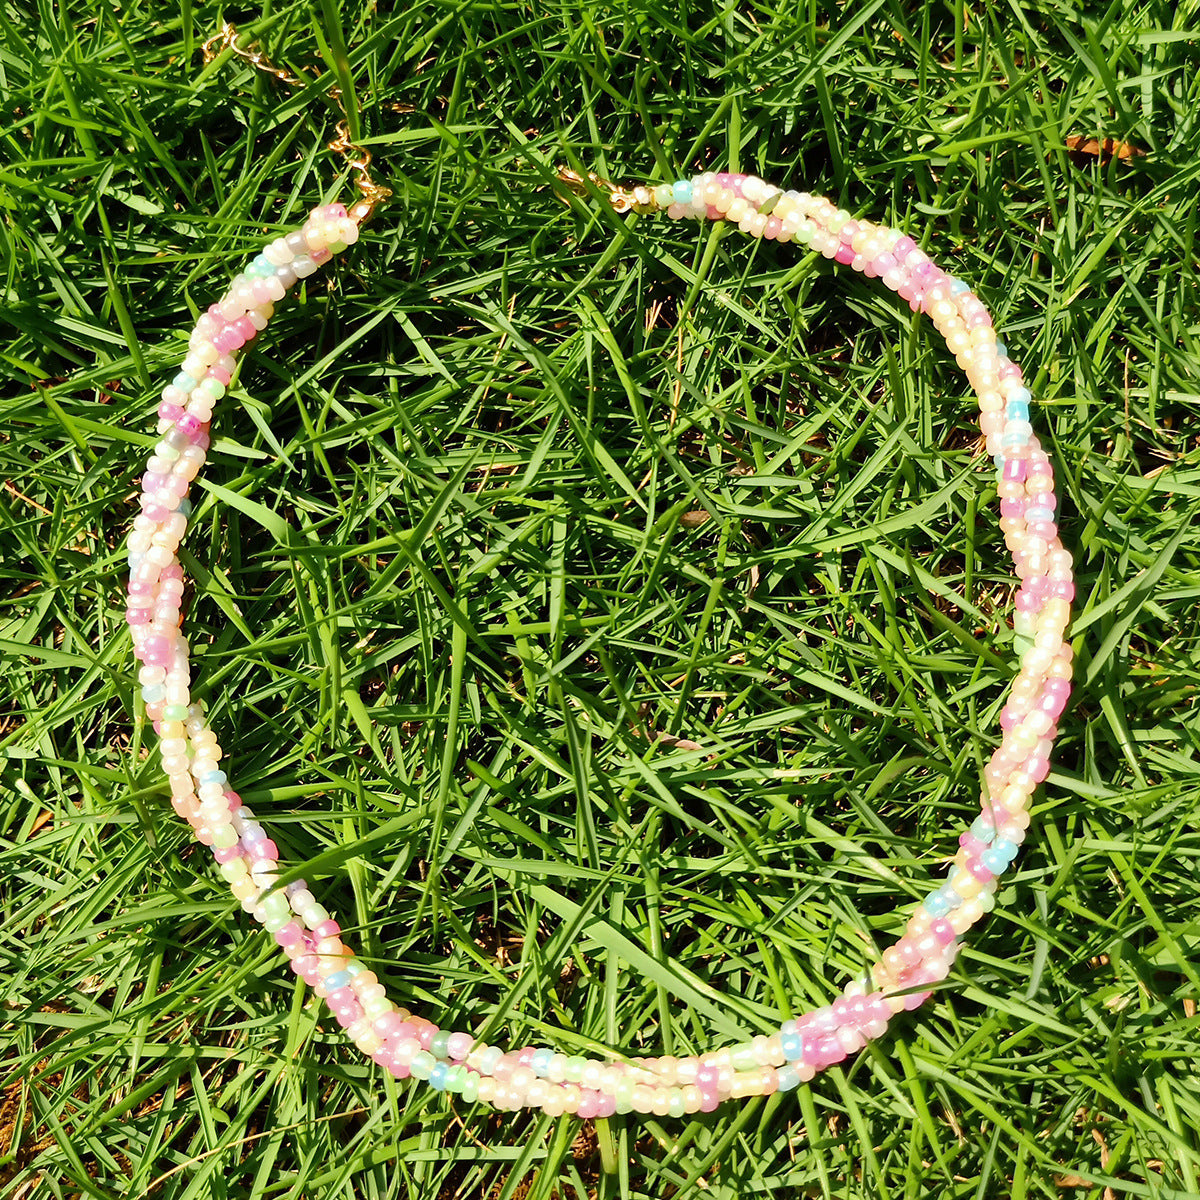 Simple Style Twist Imitation Pearl Beaded Bracelets Necklace